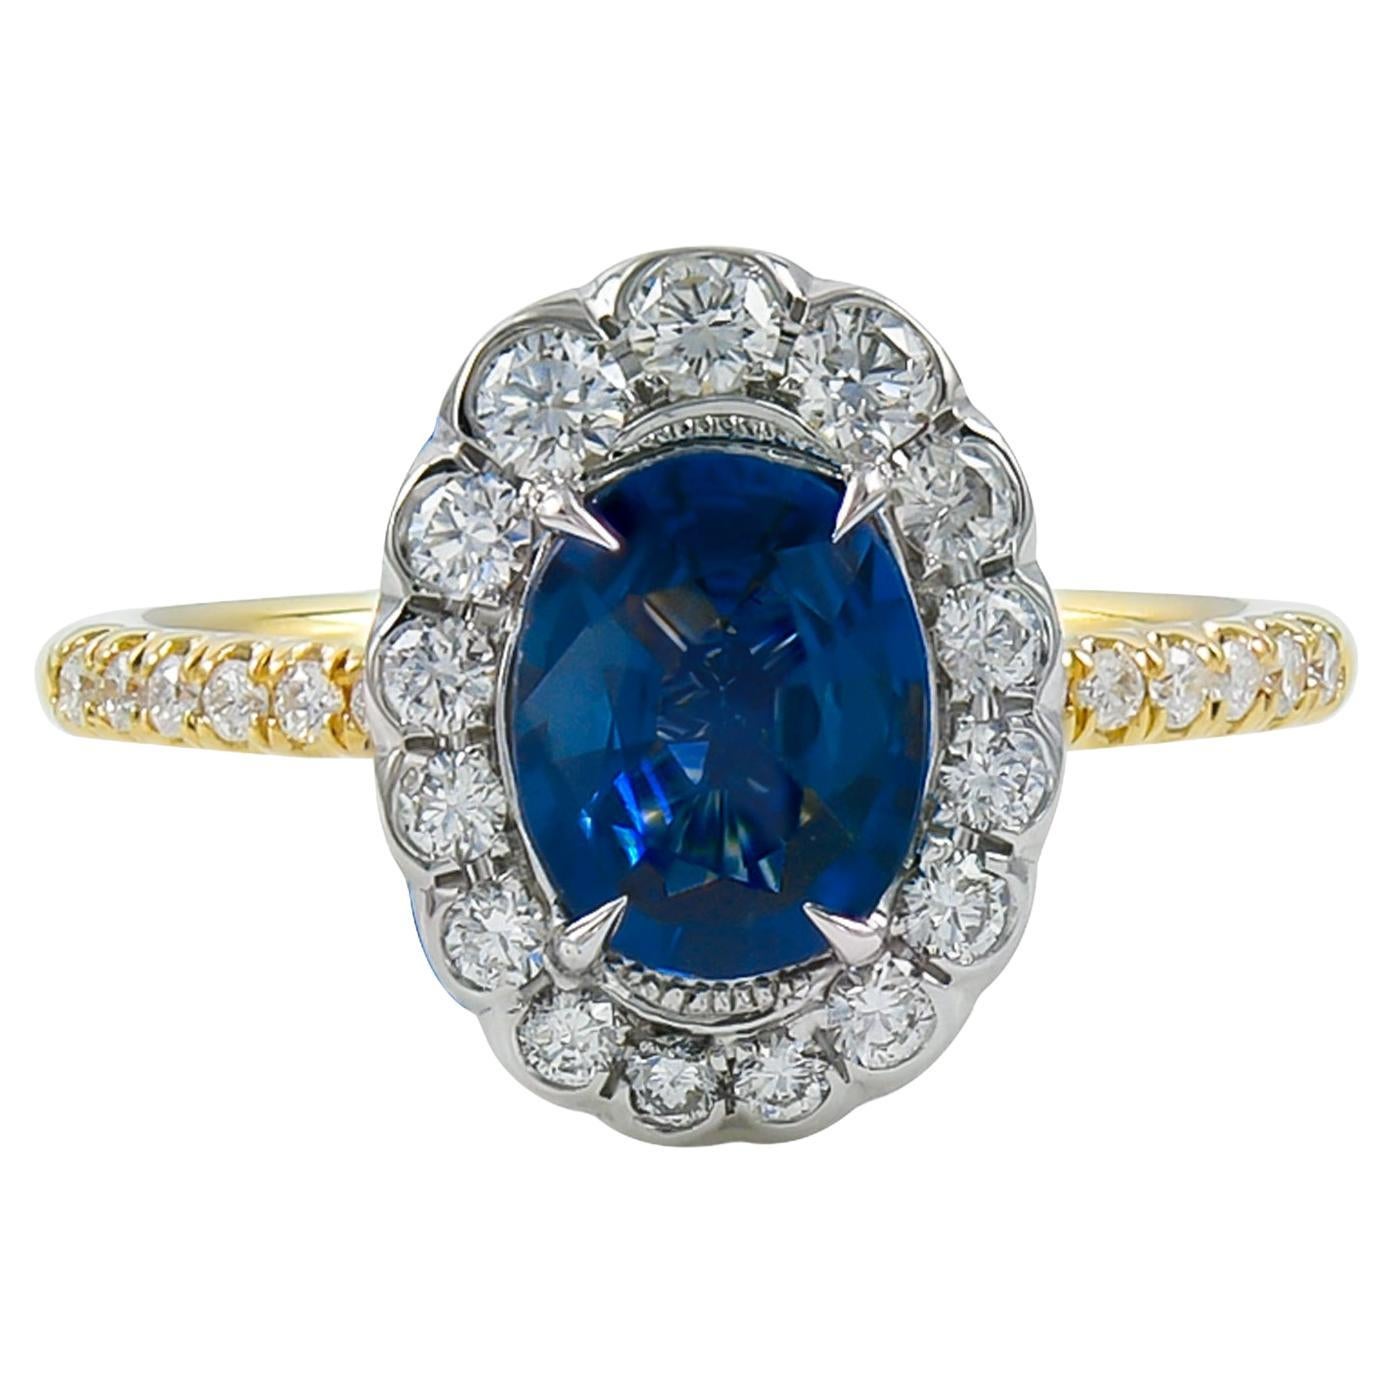 Spectra Fine Jewelry 1.42 Carat Sapphire Diamond Cocktail Ring